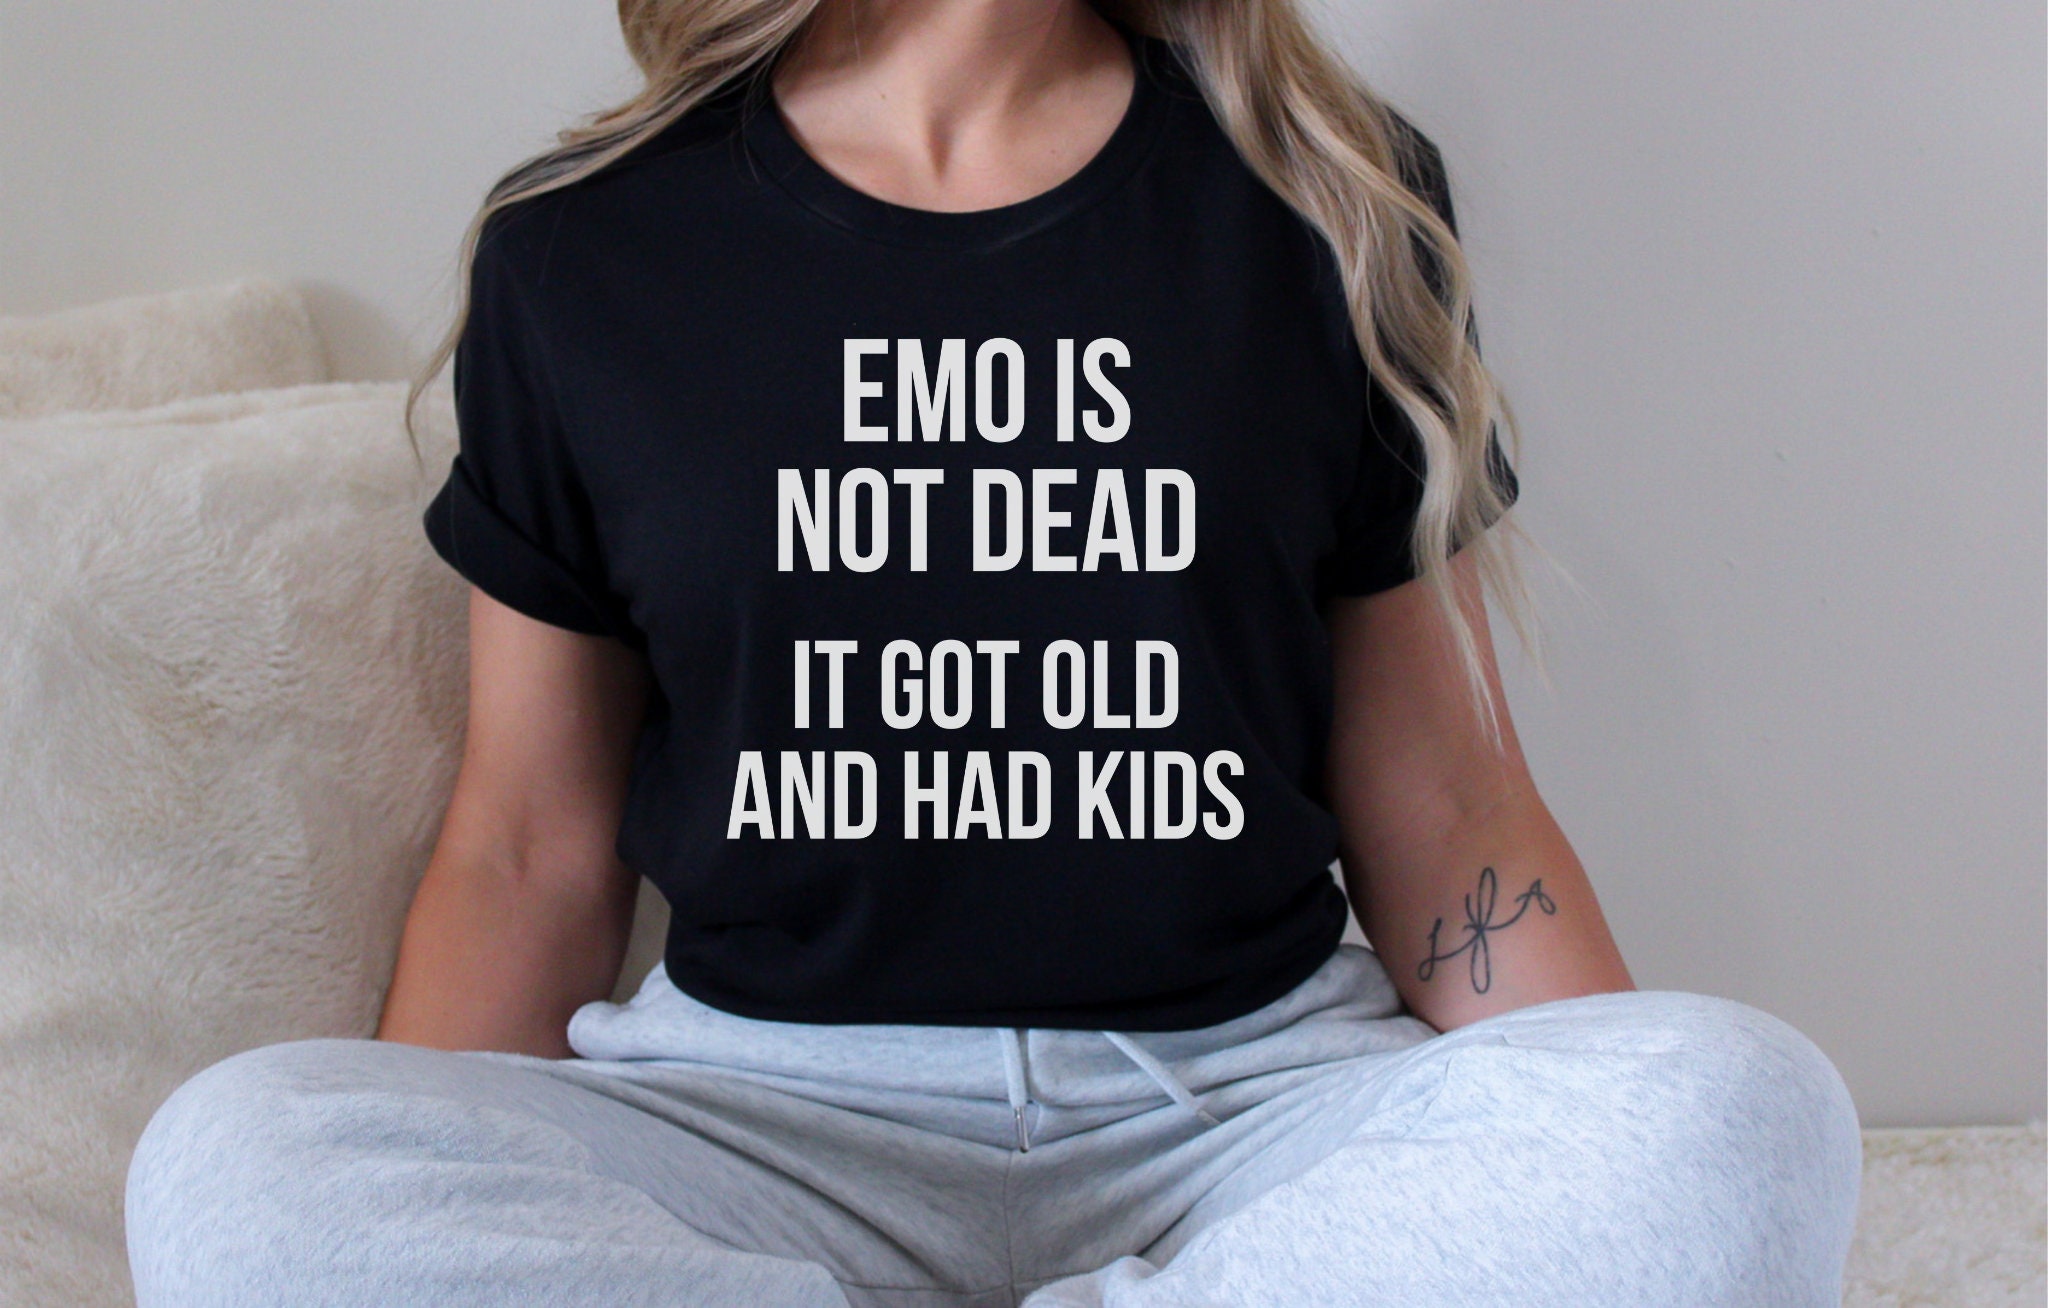 Threadless Former Emo Kid T-Shirt